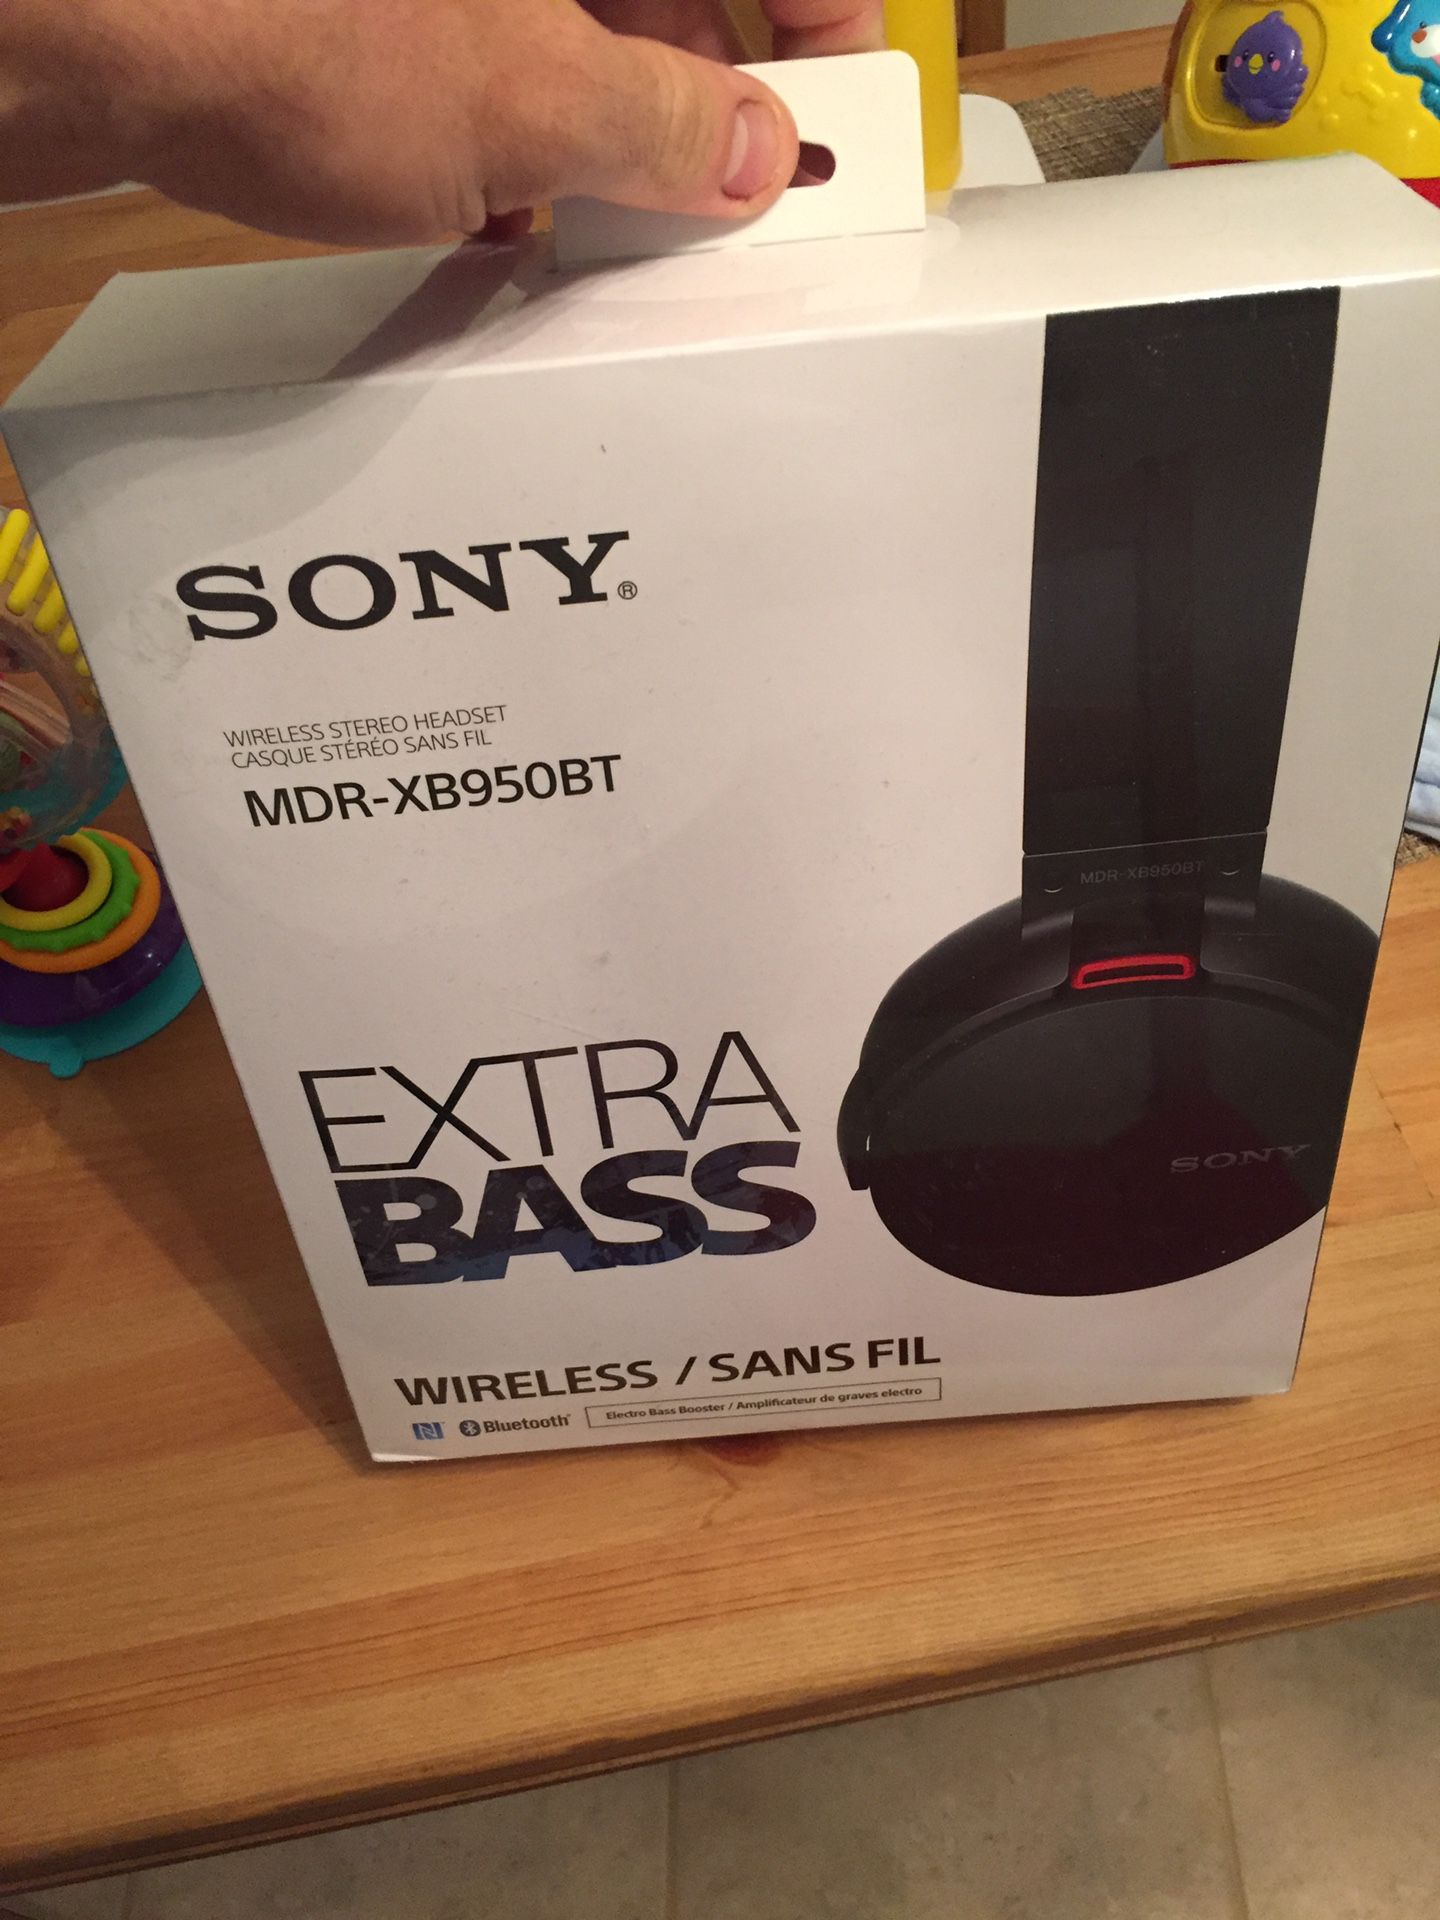 Sony mdr-xb950bt extra bass headphones